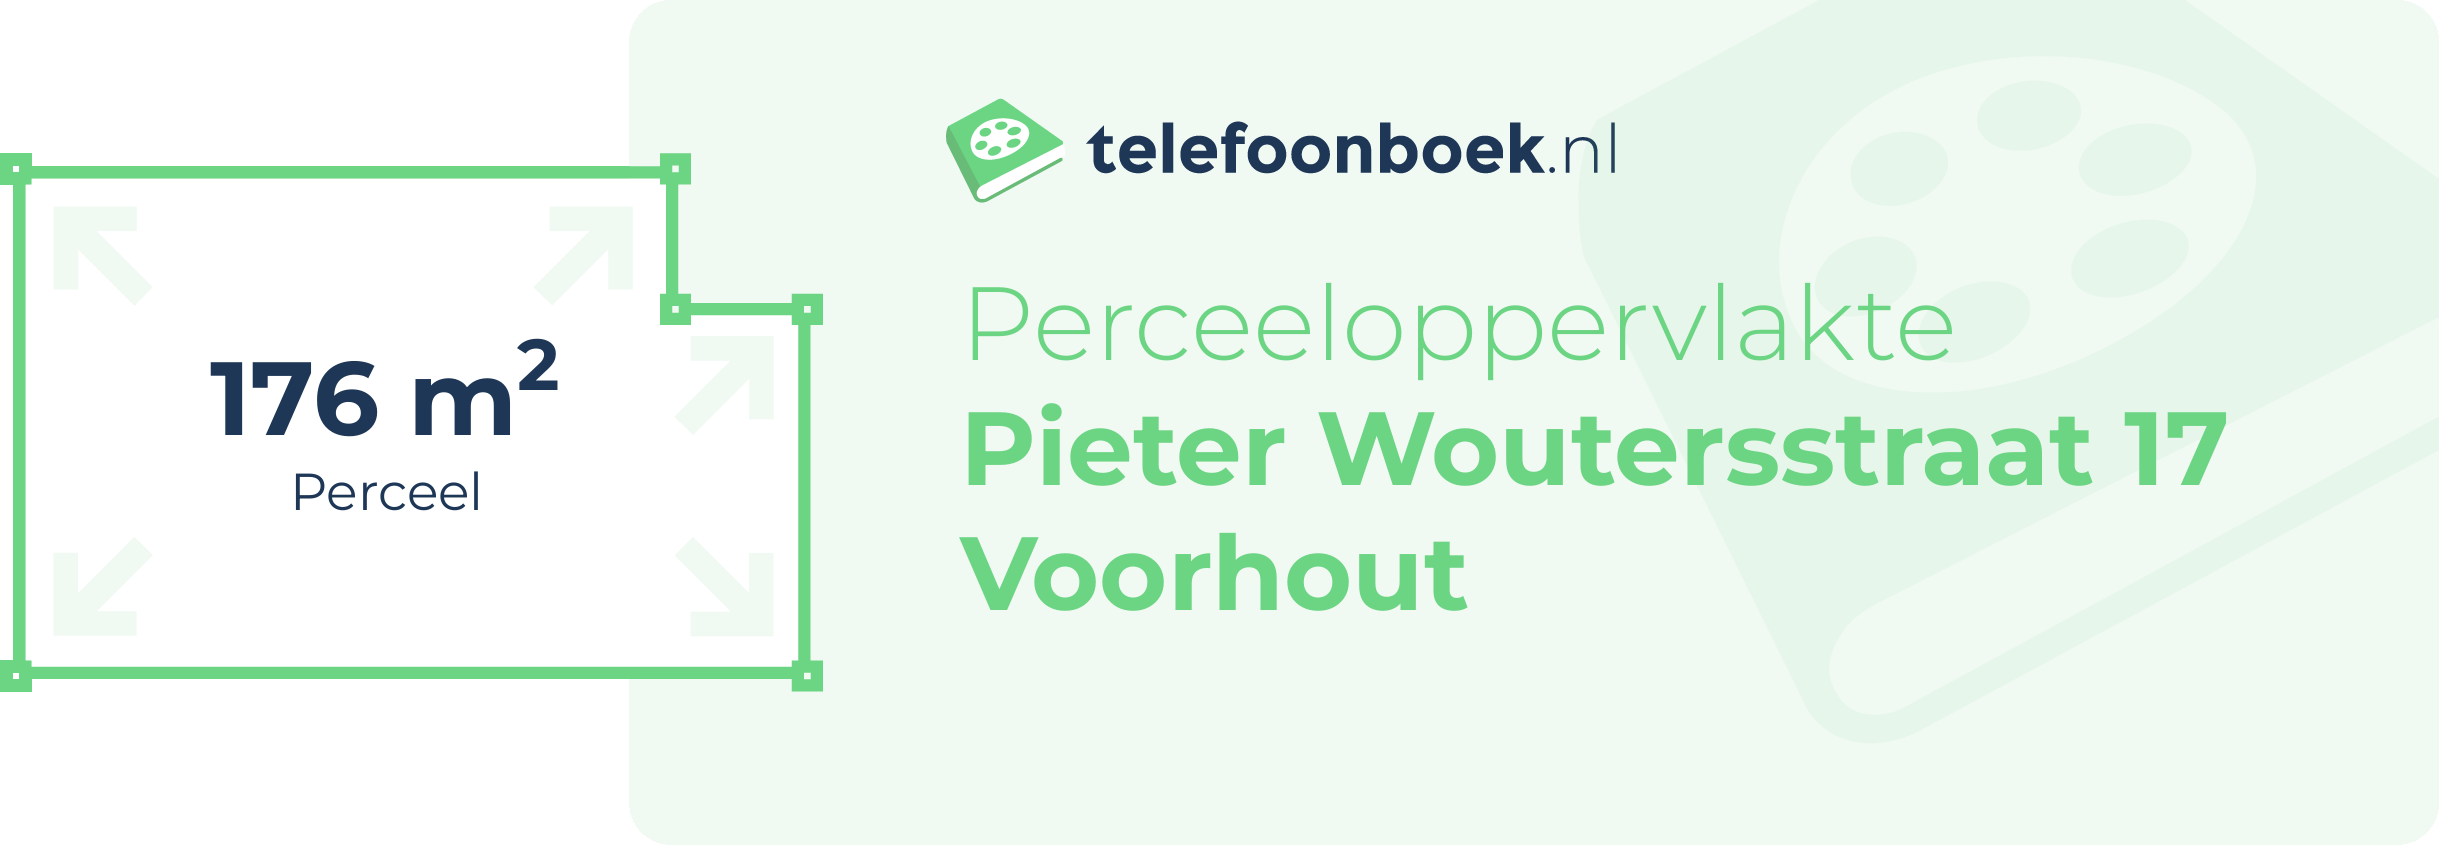 Perceeloppervlakte Pieter Woutersstraat 17 Voorhout